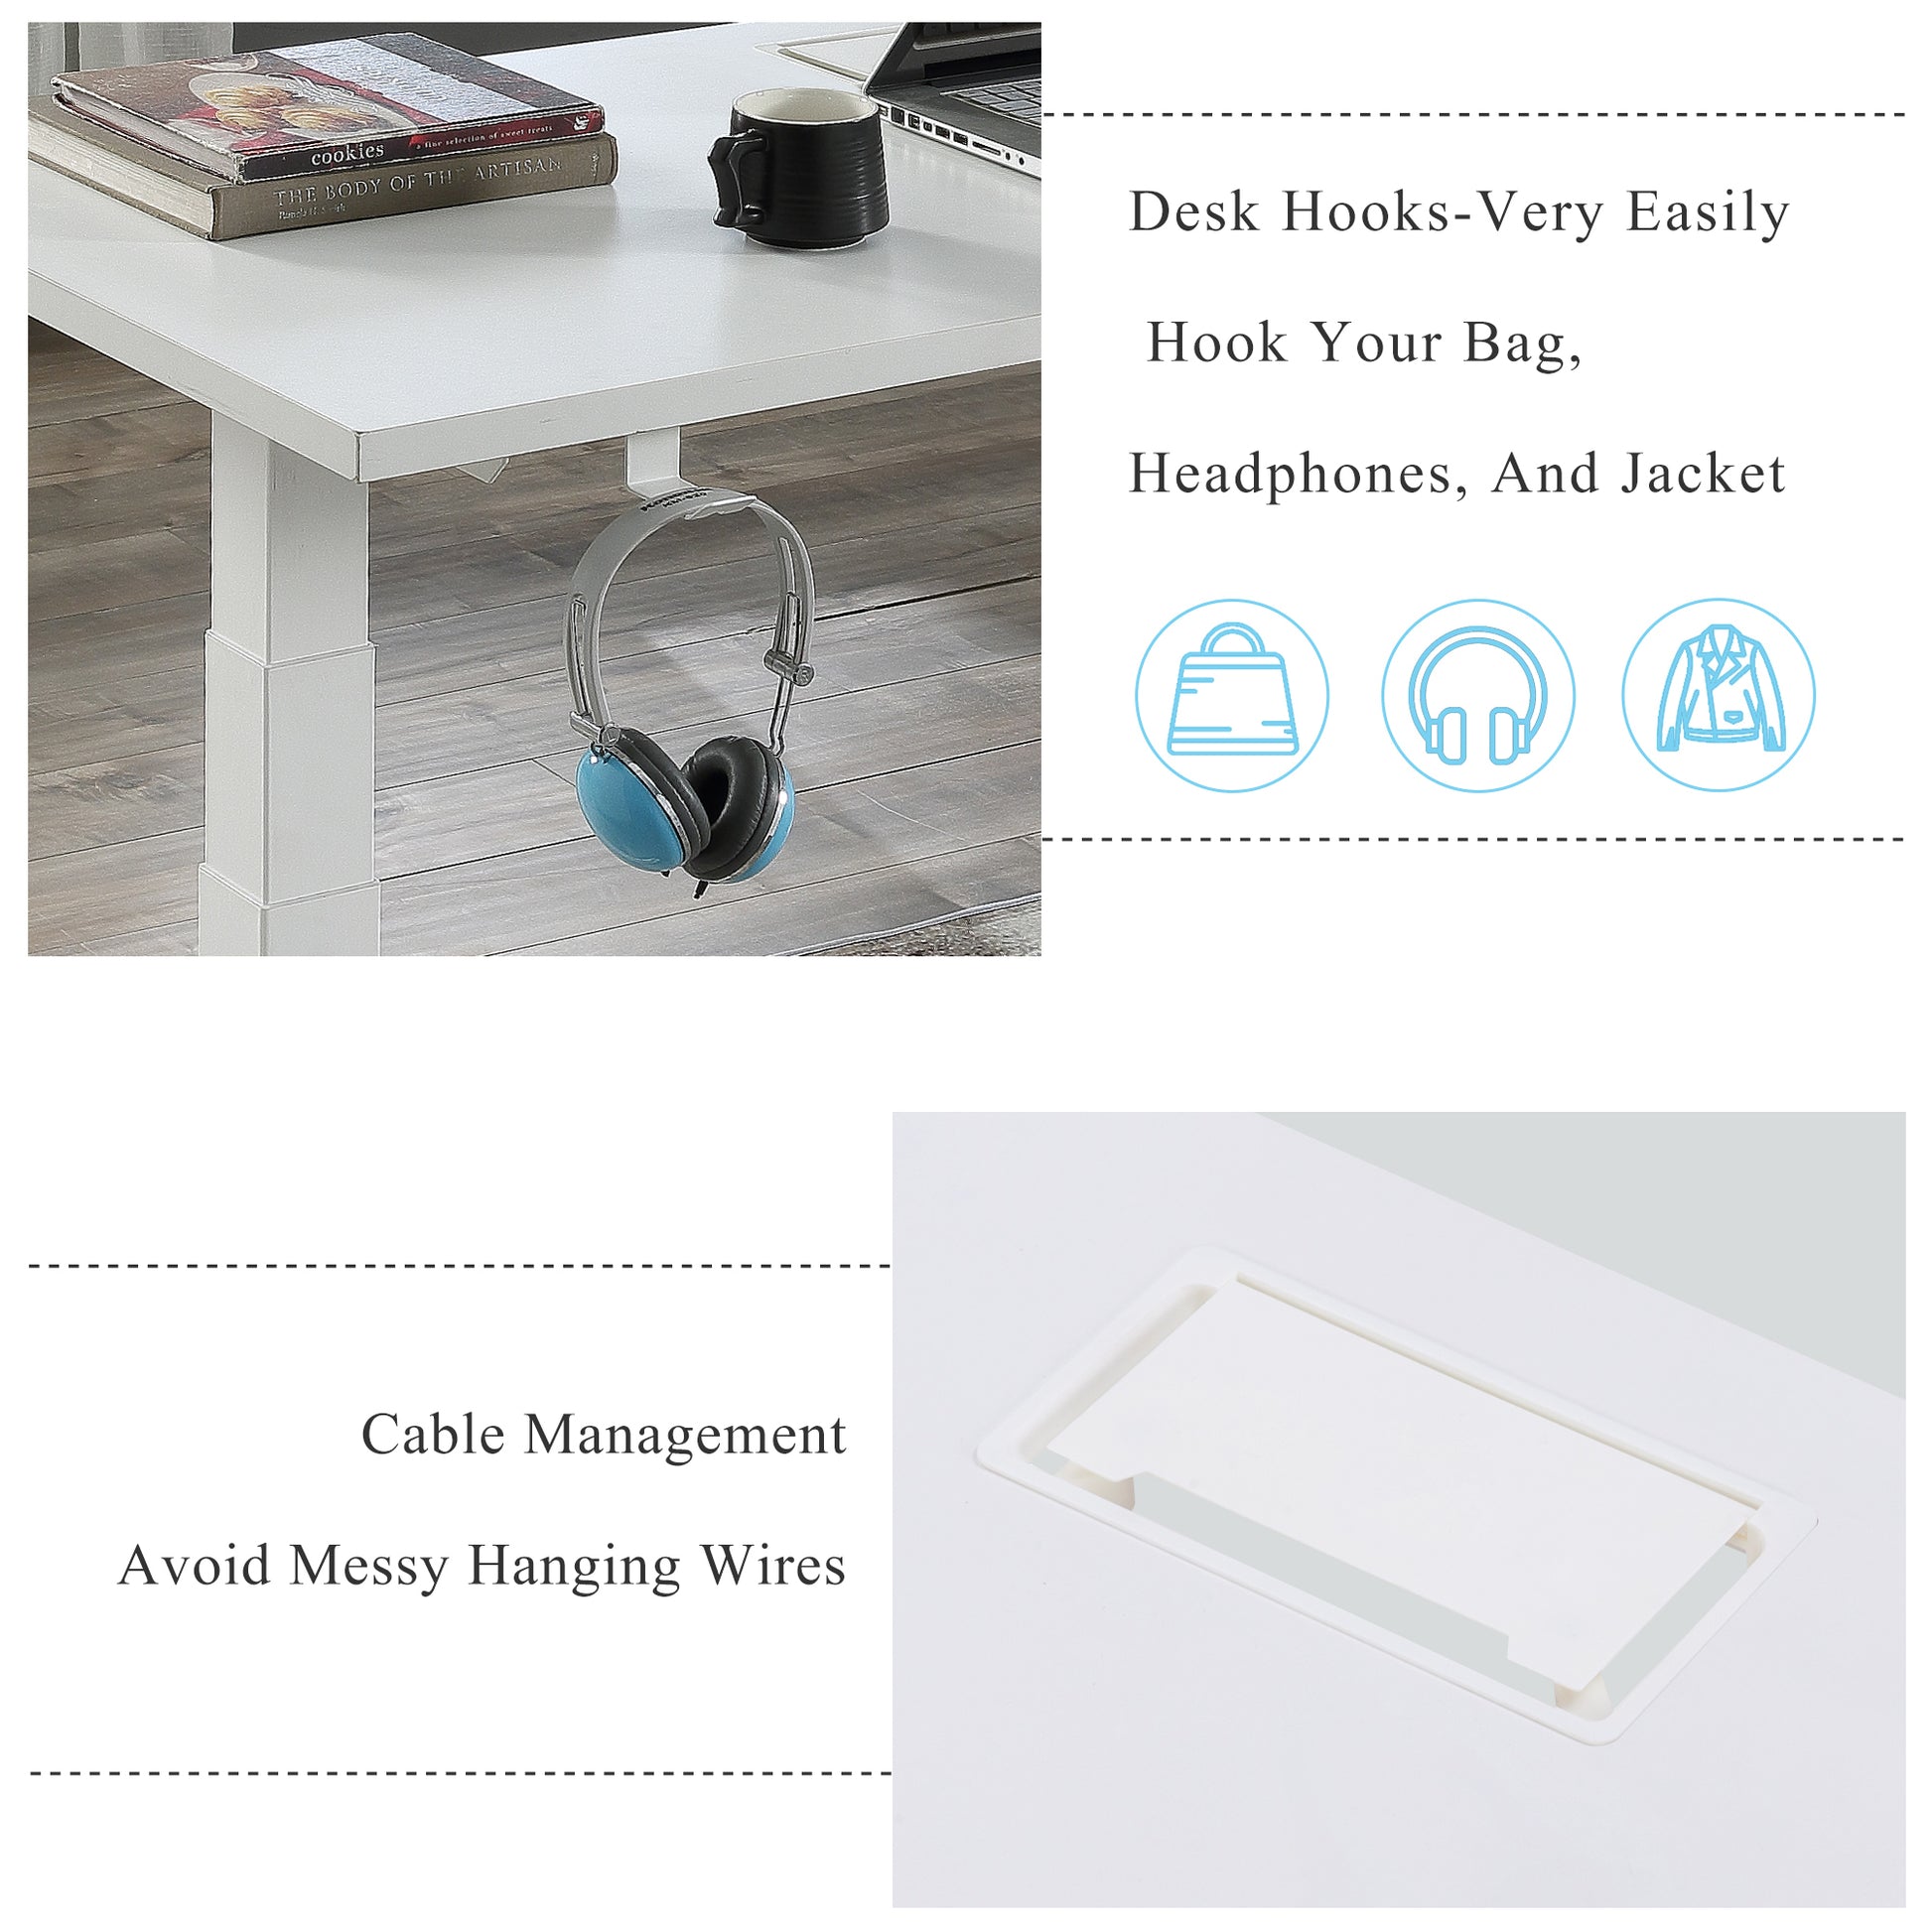 Adjustable Electric Standing Desk White